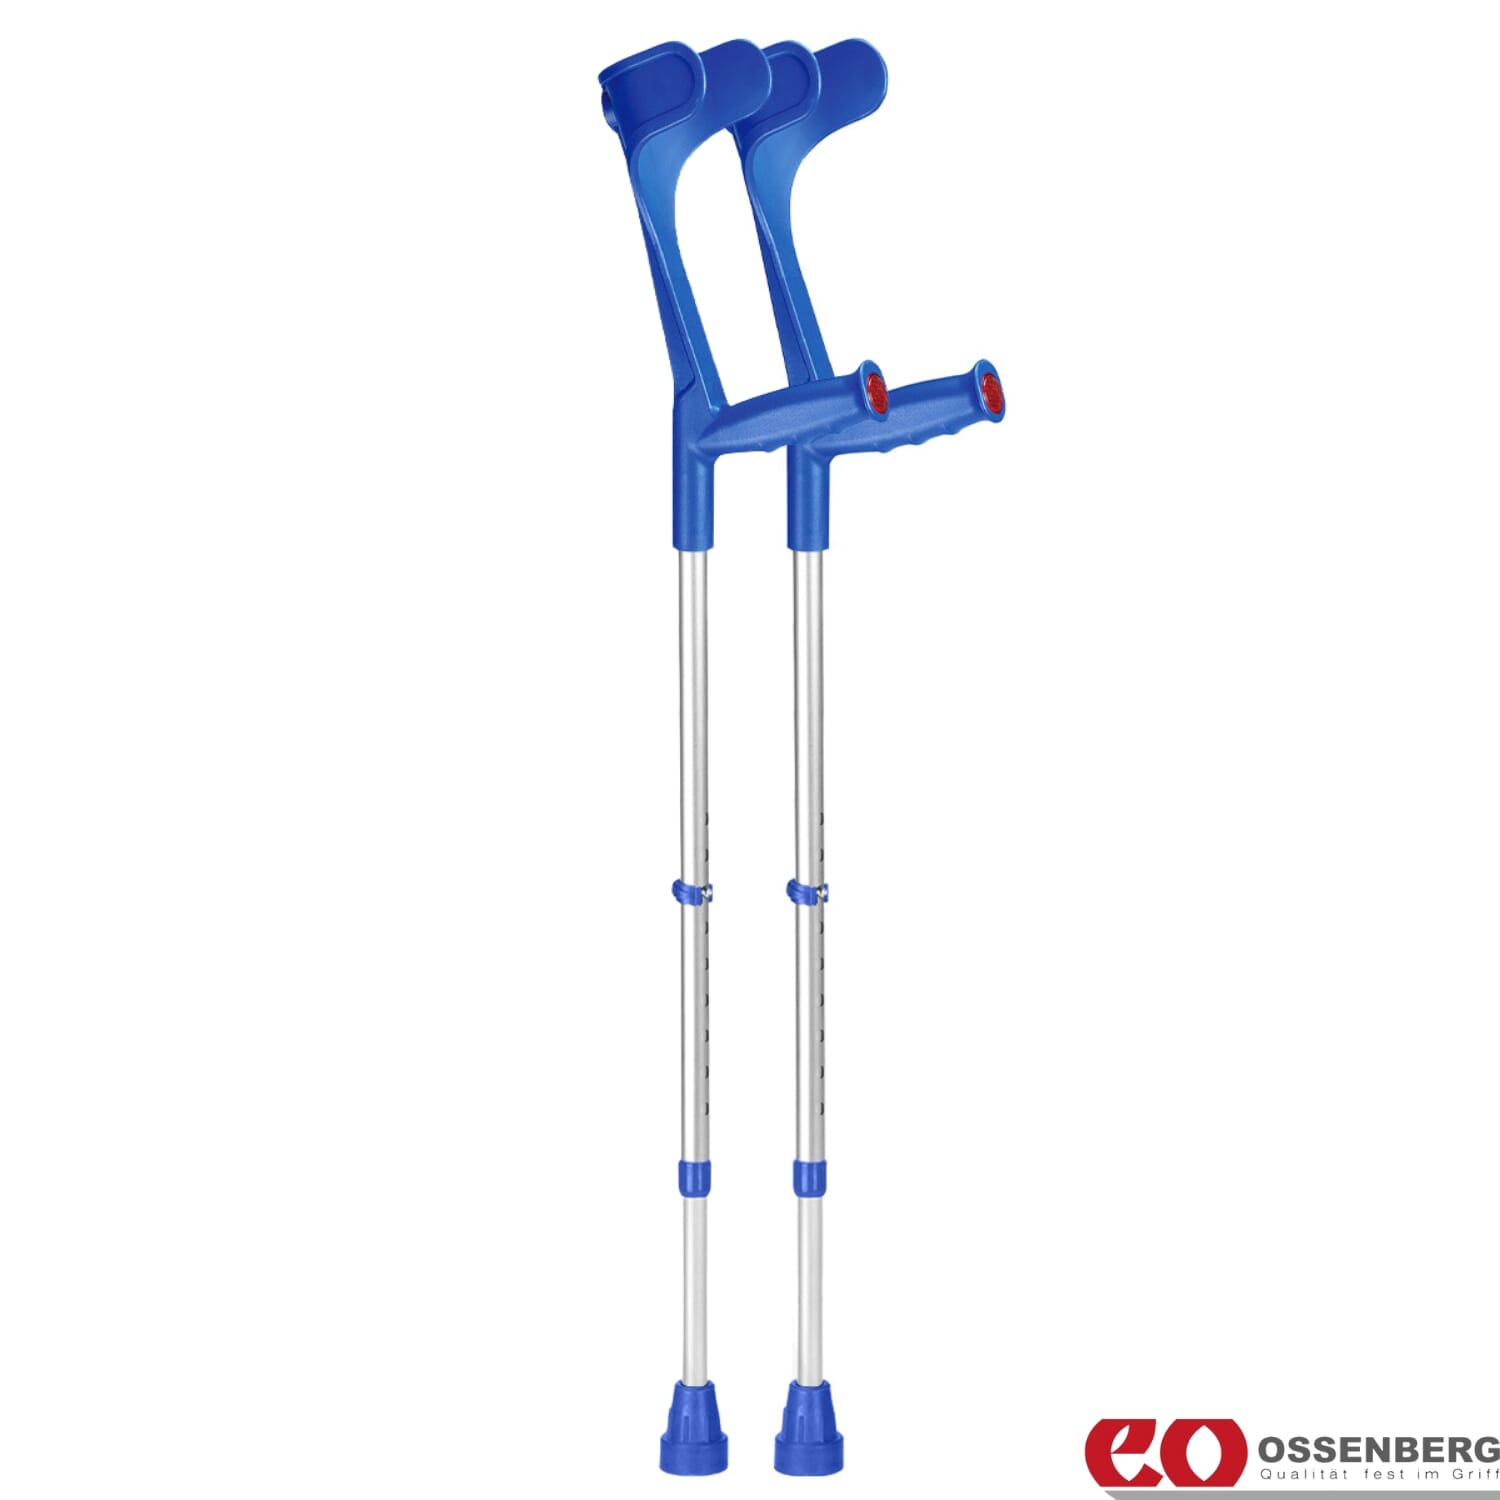 View Ossenberg Open Cuff Crutches Blue Pair information